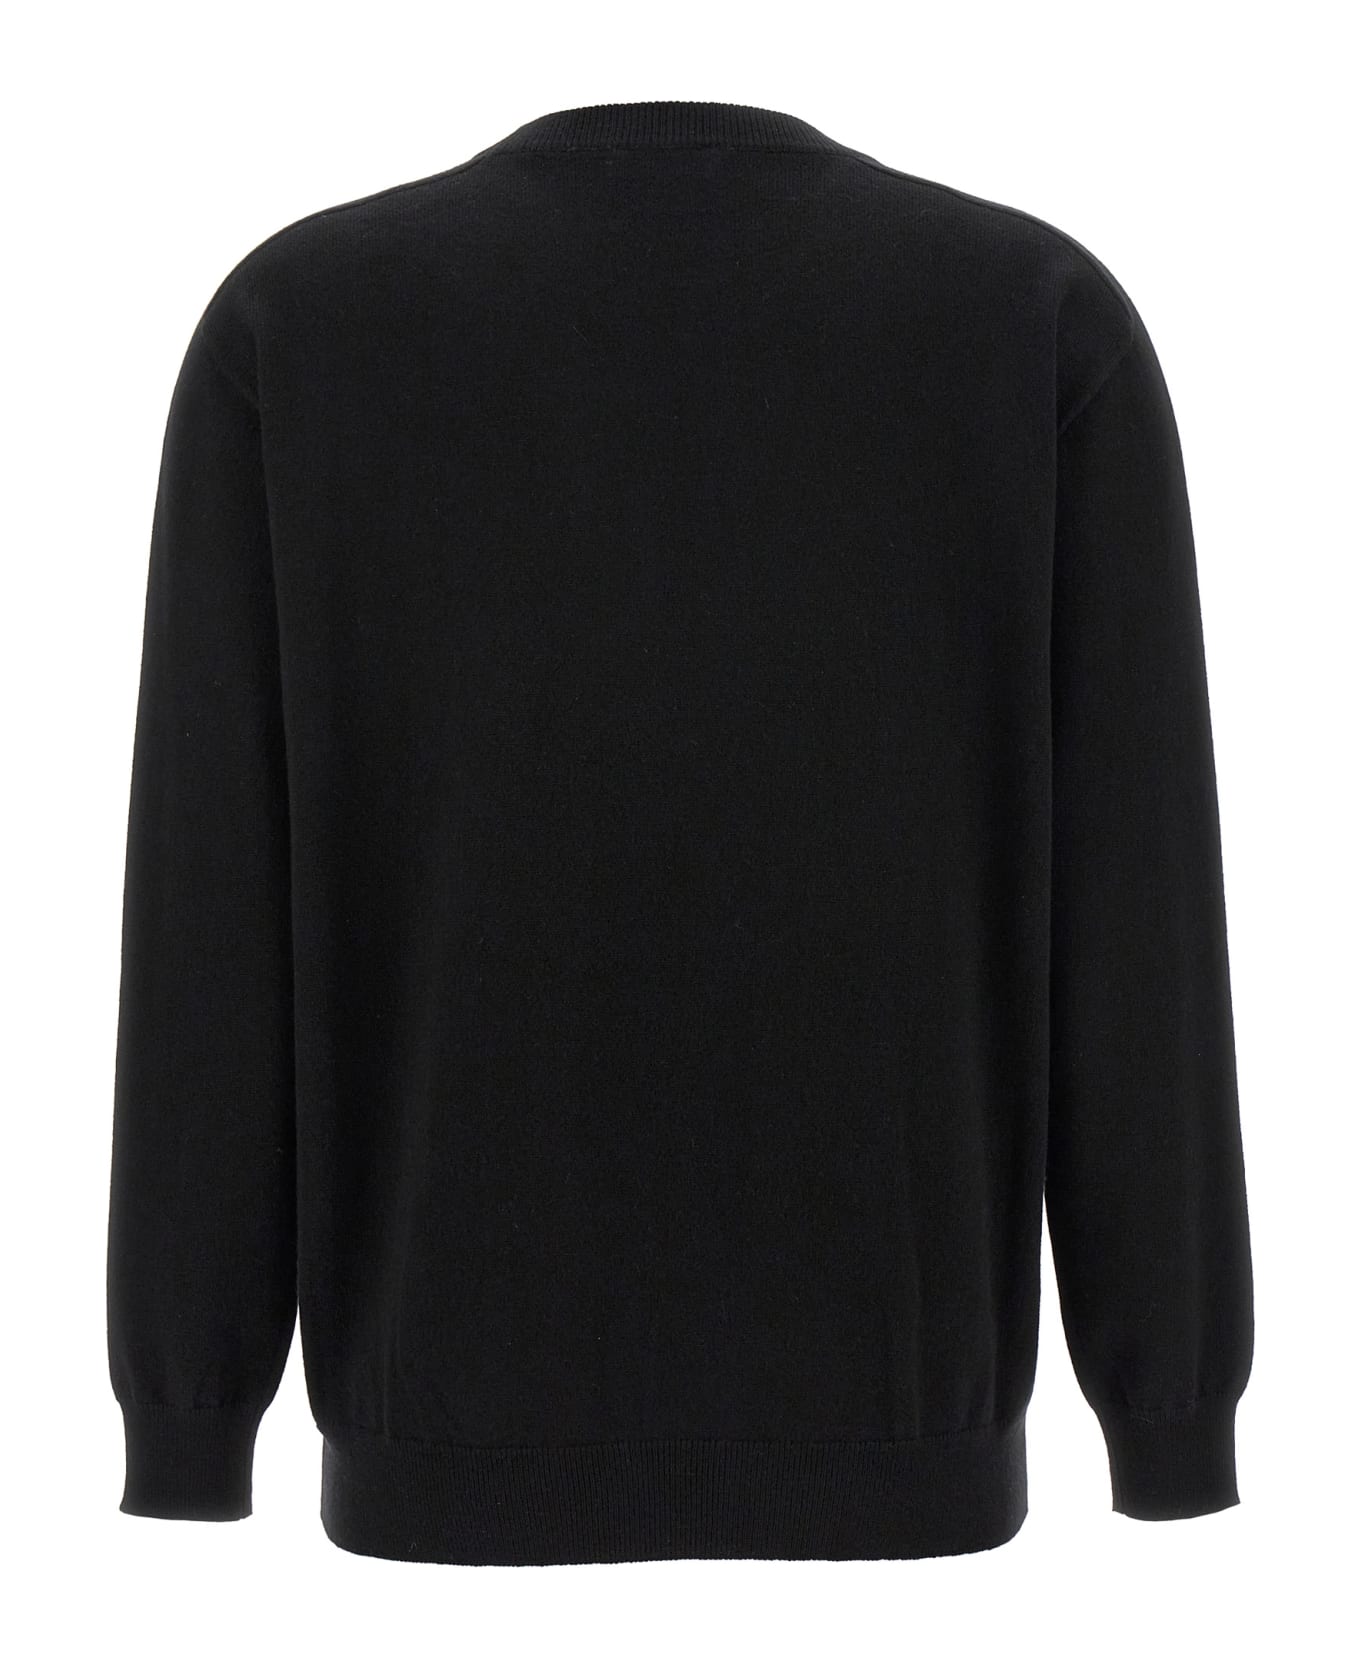 Brunello Cucinelli 'monile' Sweater - Black